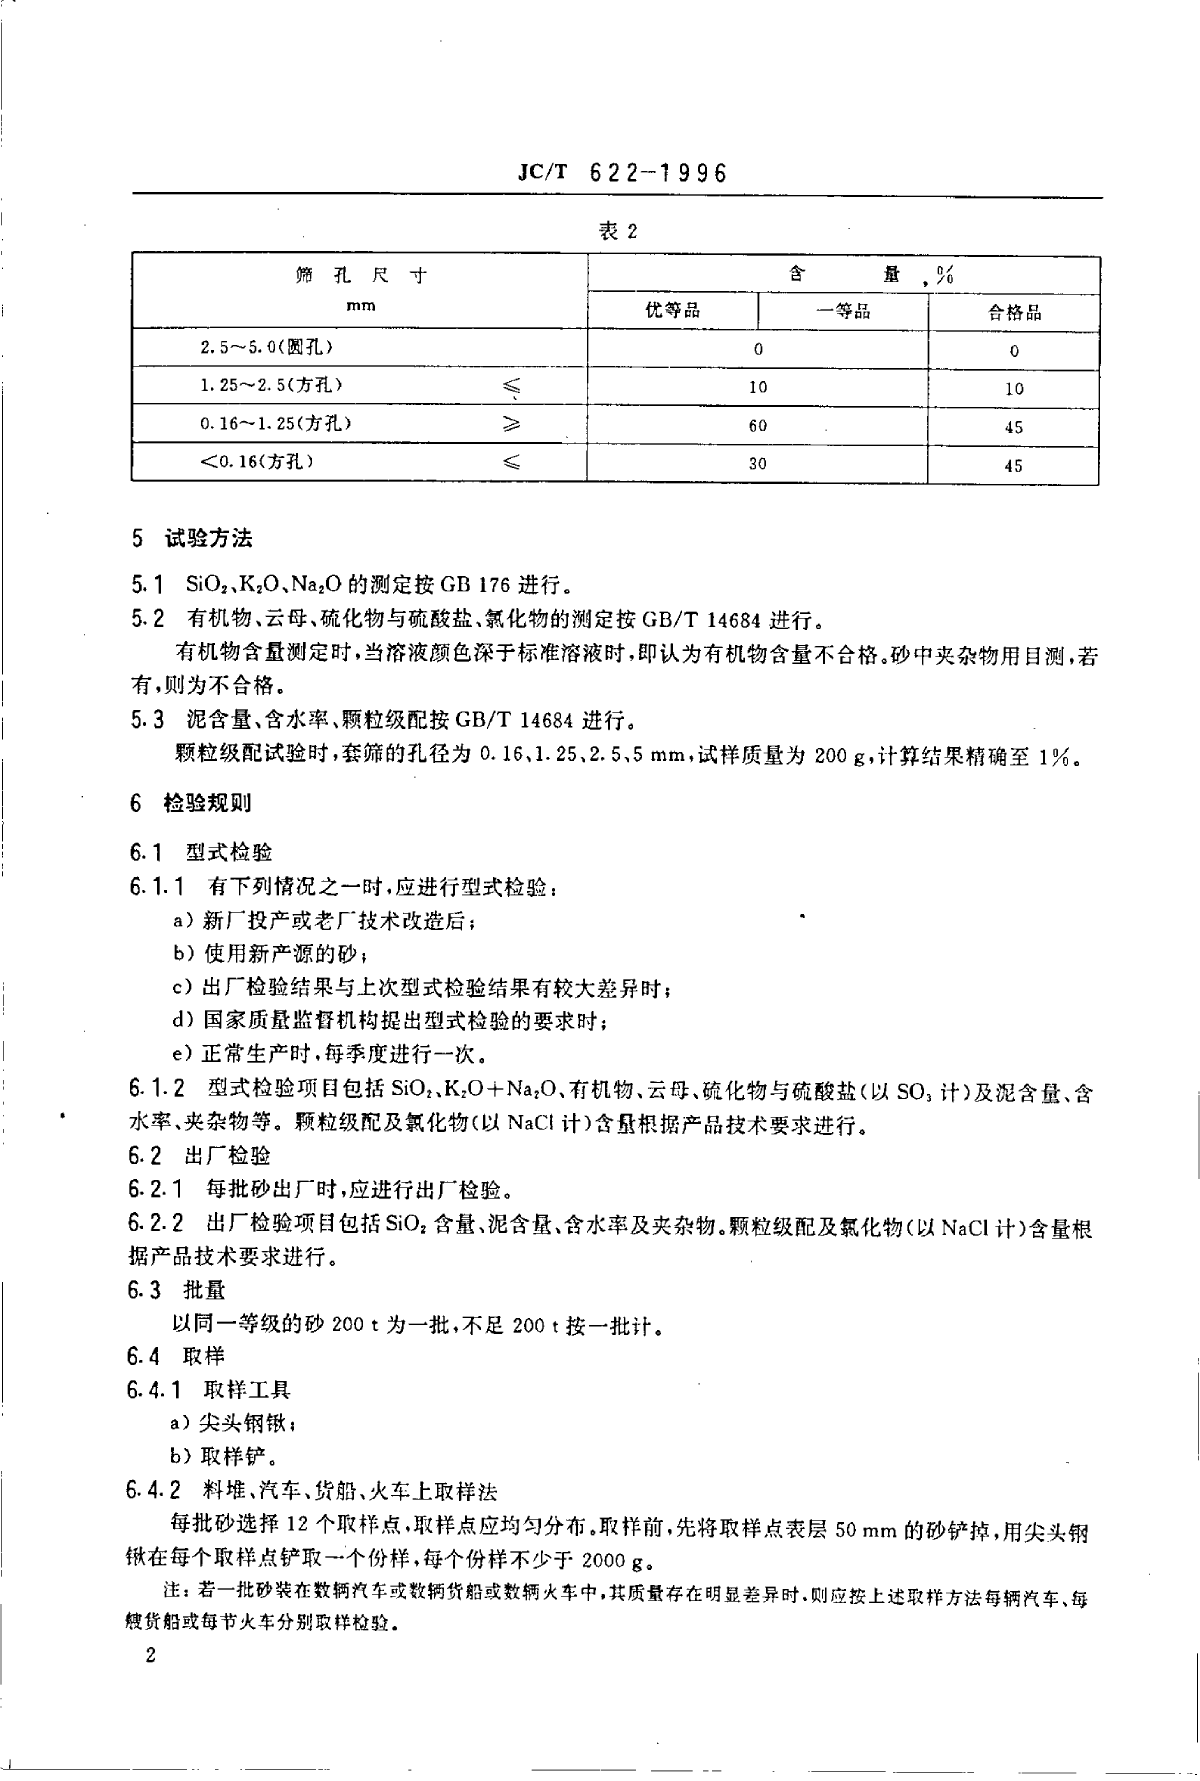 JCT 622-1996 硅酸盐建筑制品用砂-图二